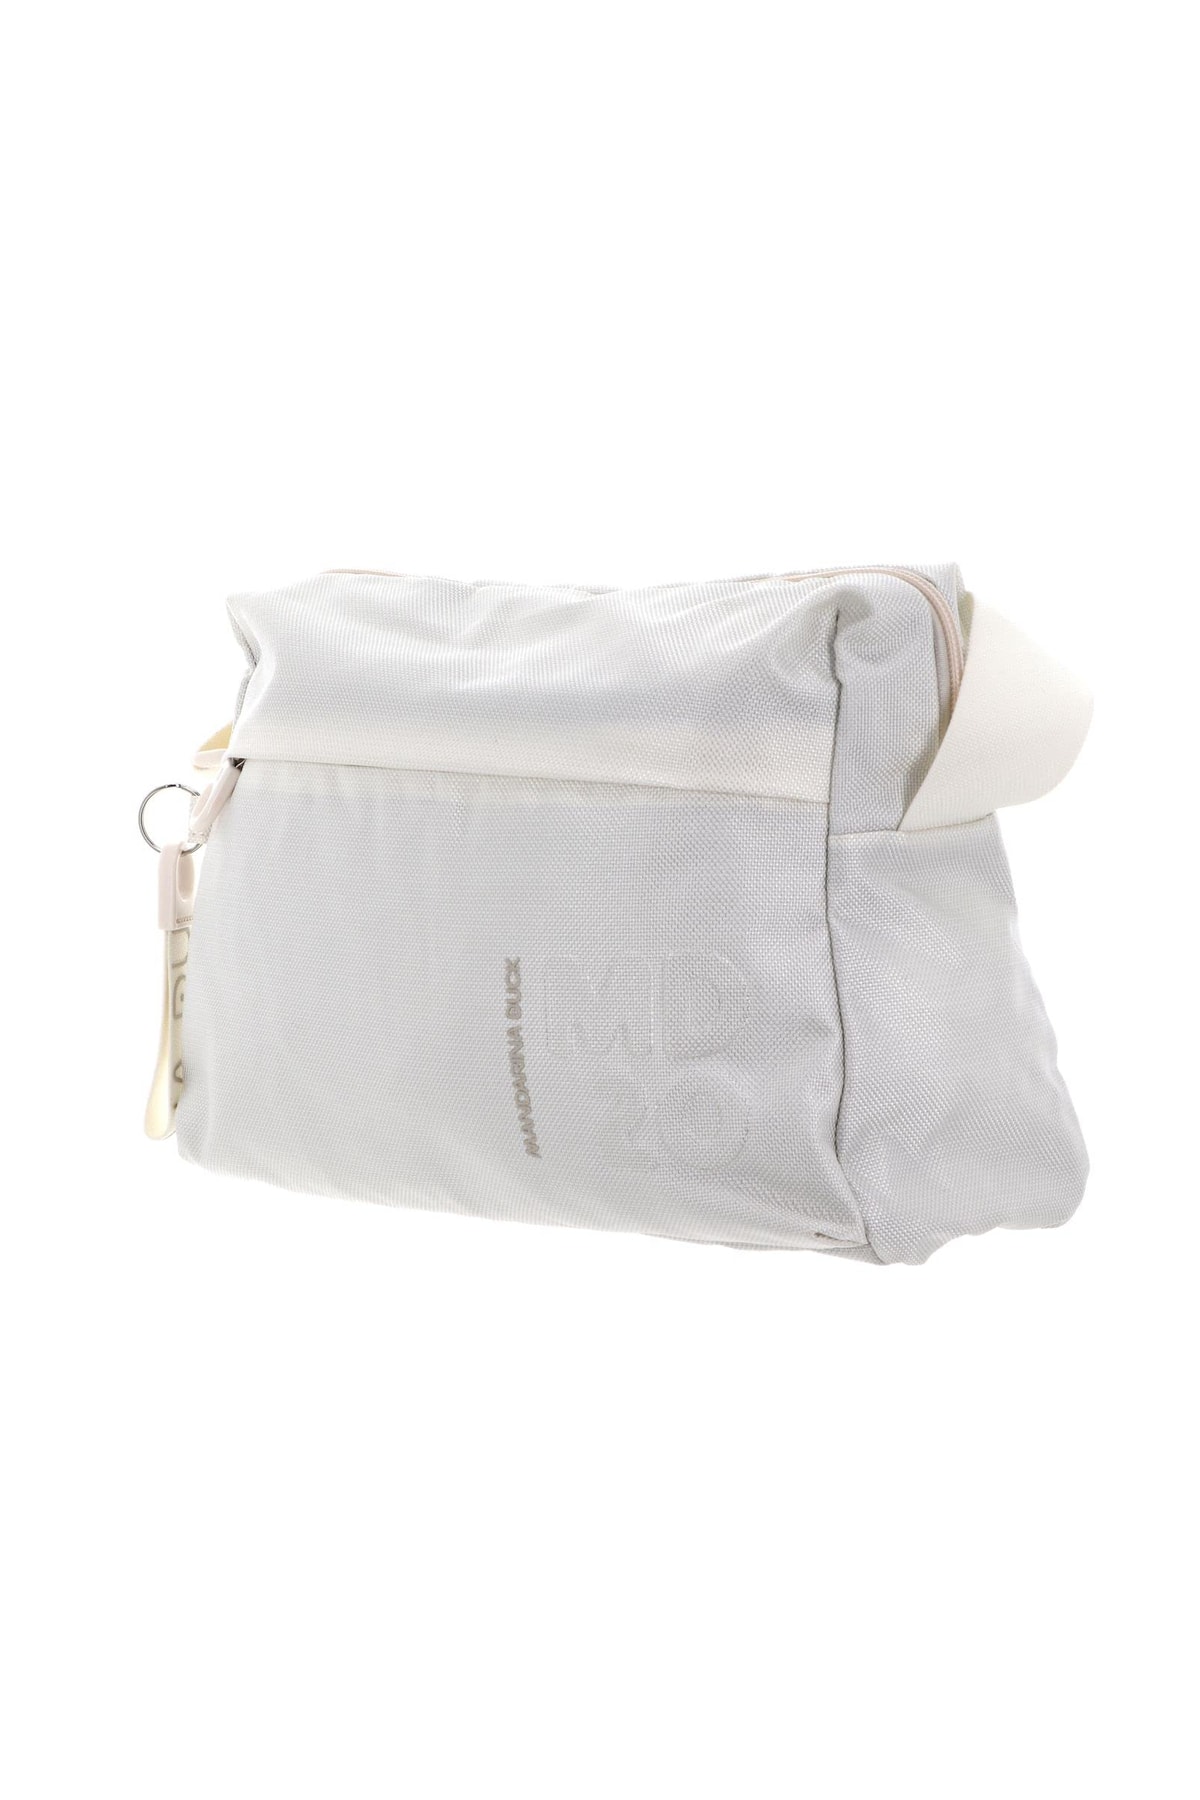 Mandarina Duck Handtasche Weiß Strukturiert